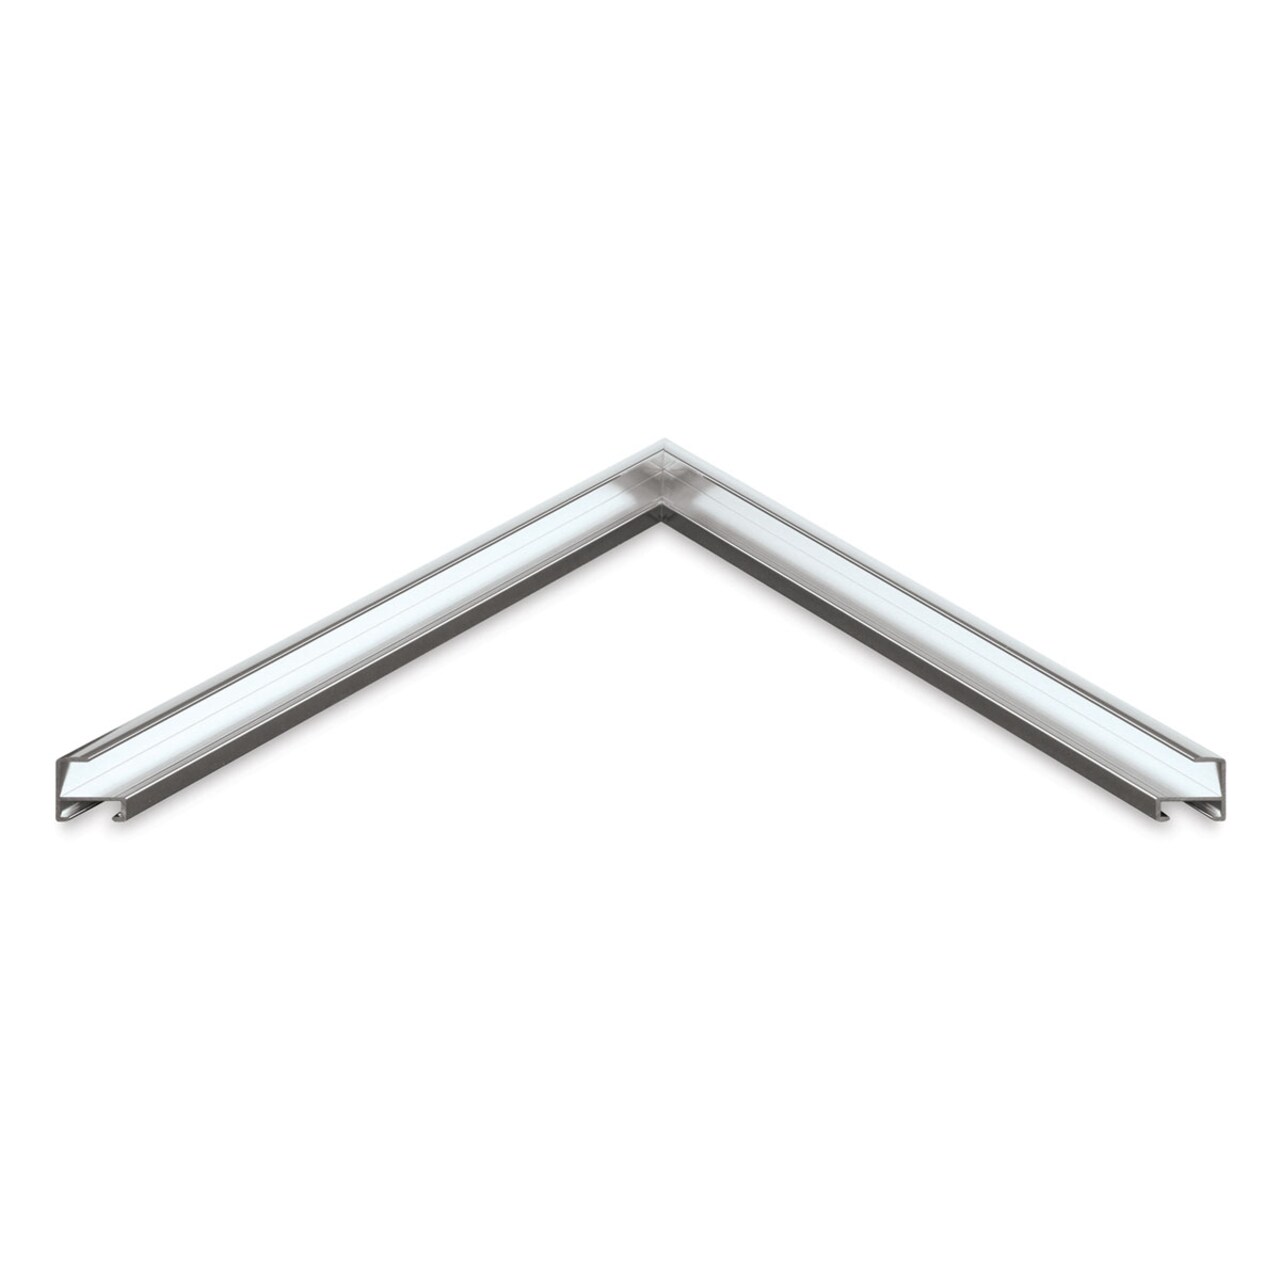 Nielsen Bainbridge Metal Frame Kit-40&#x201D; x 7/16&#x201D;, Silver, 2 Bars